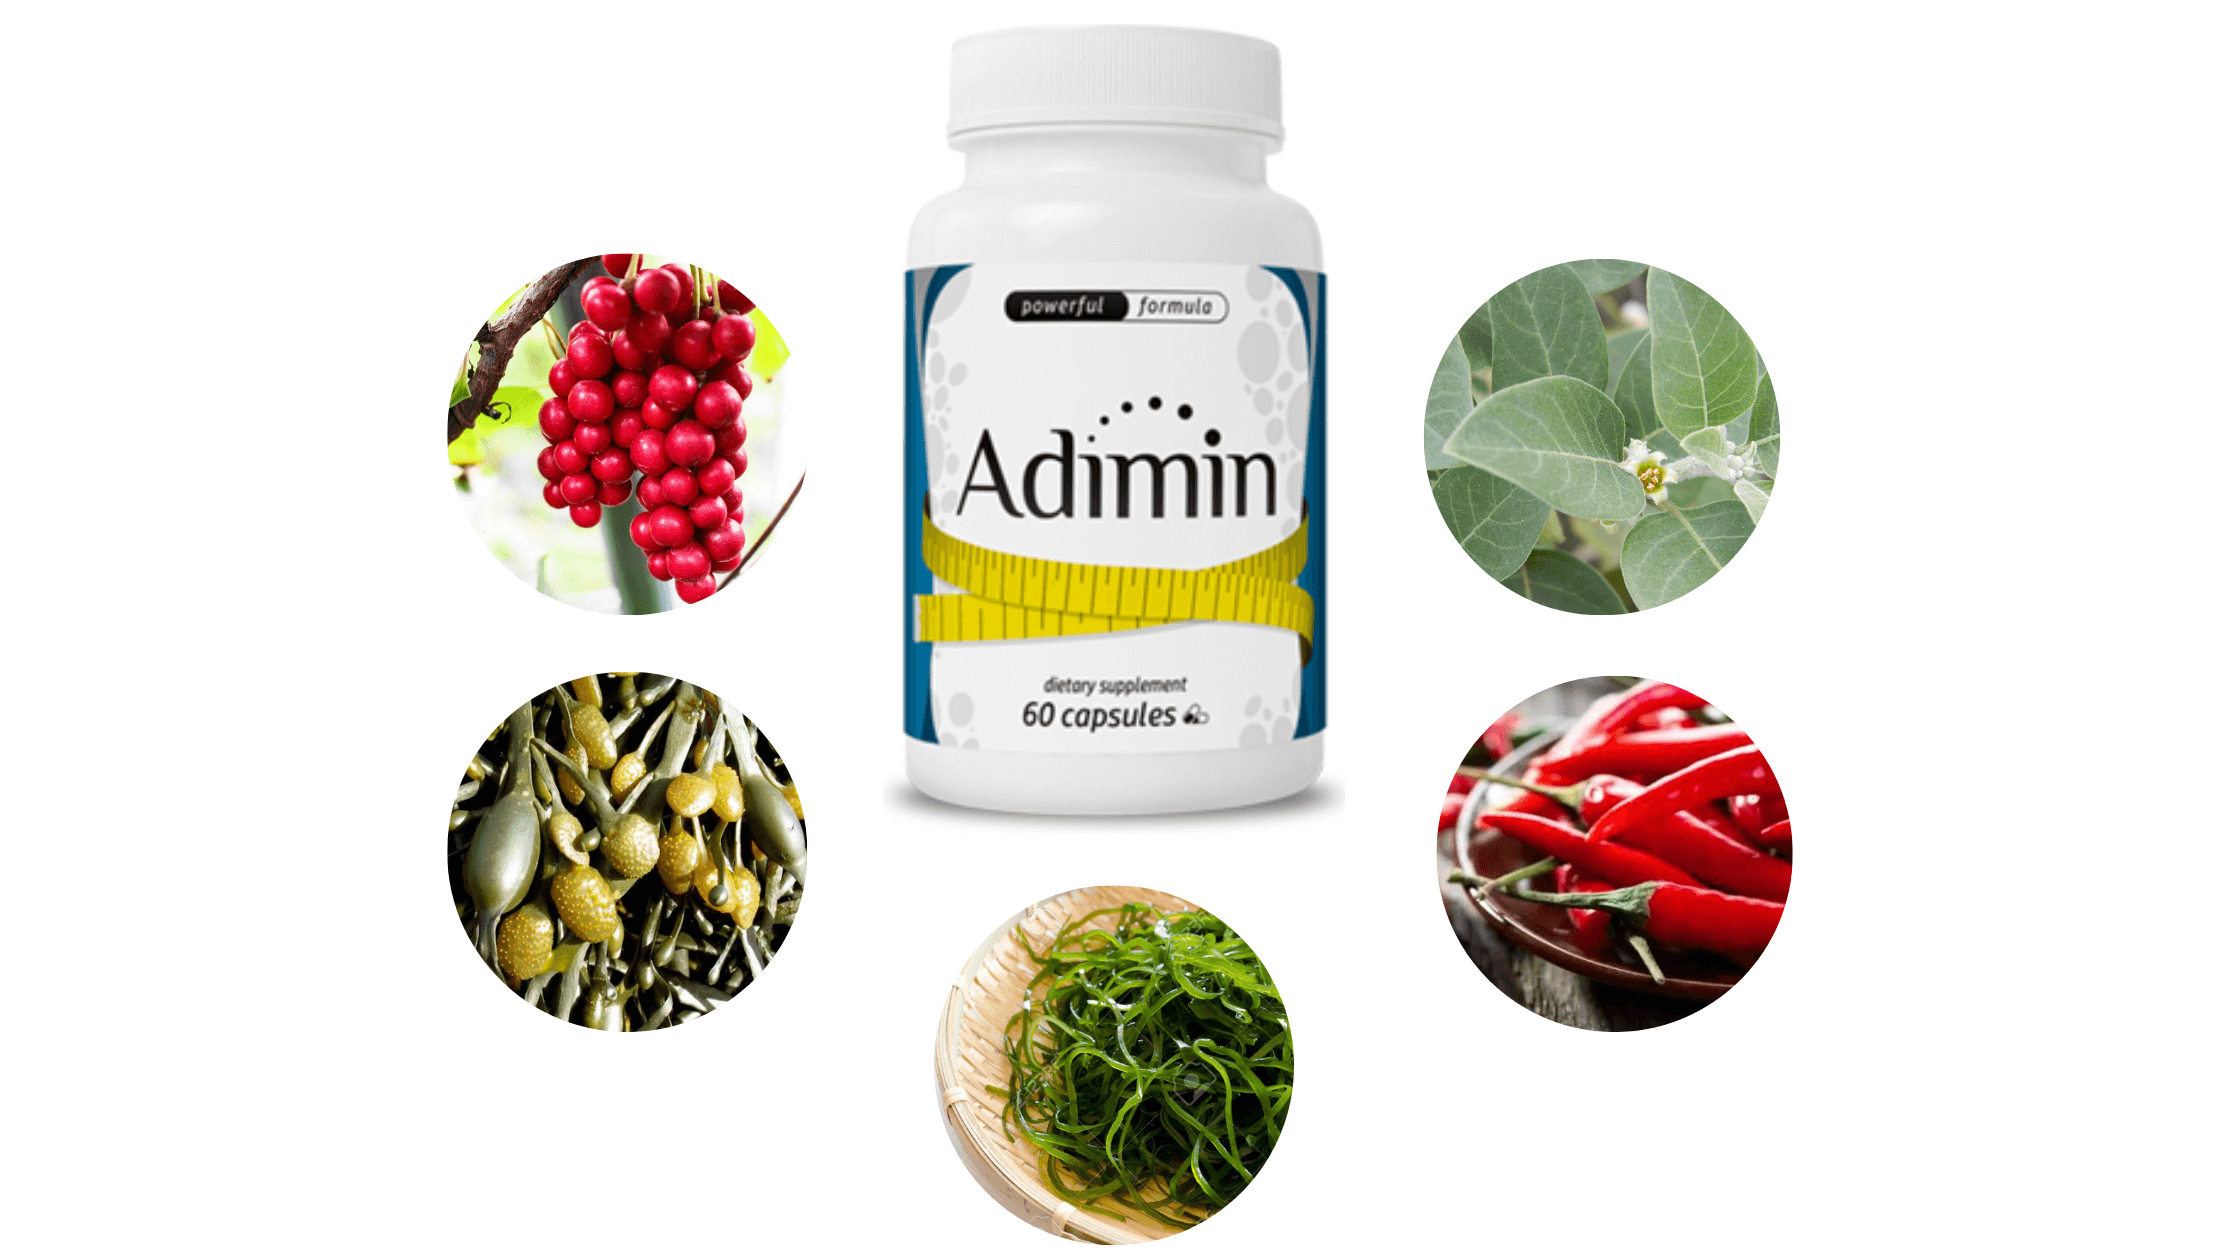 Adimin supplement ingredients